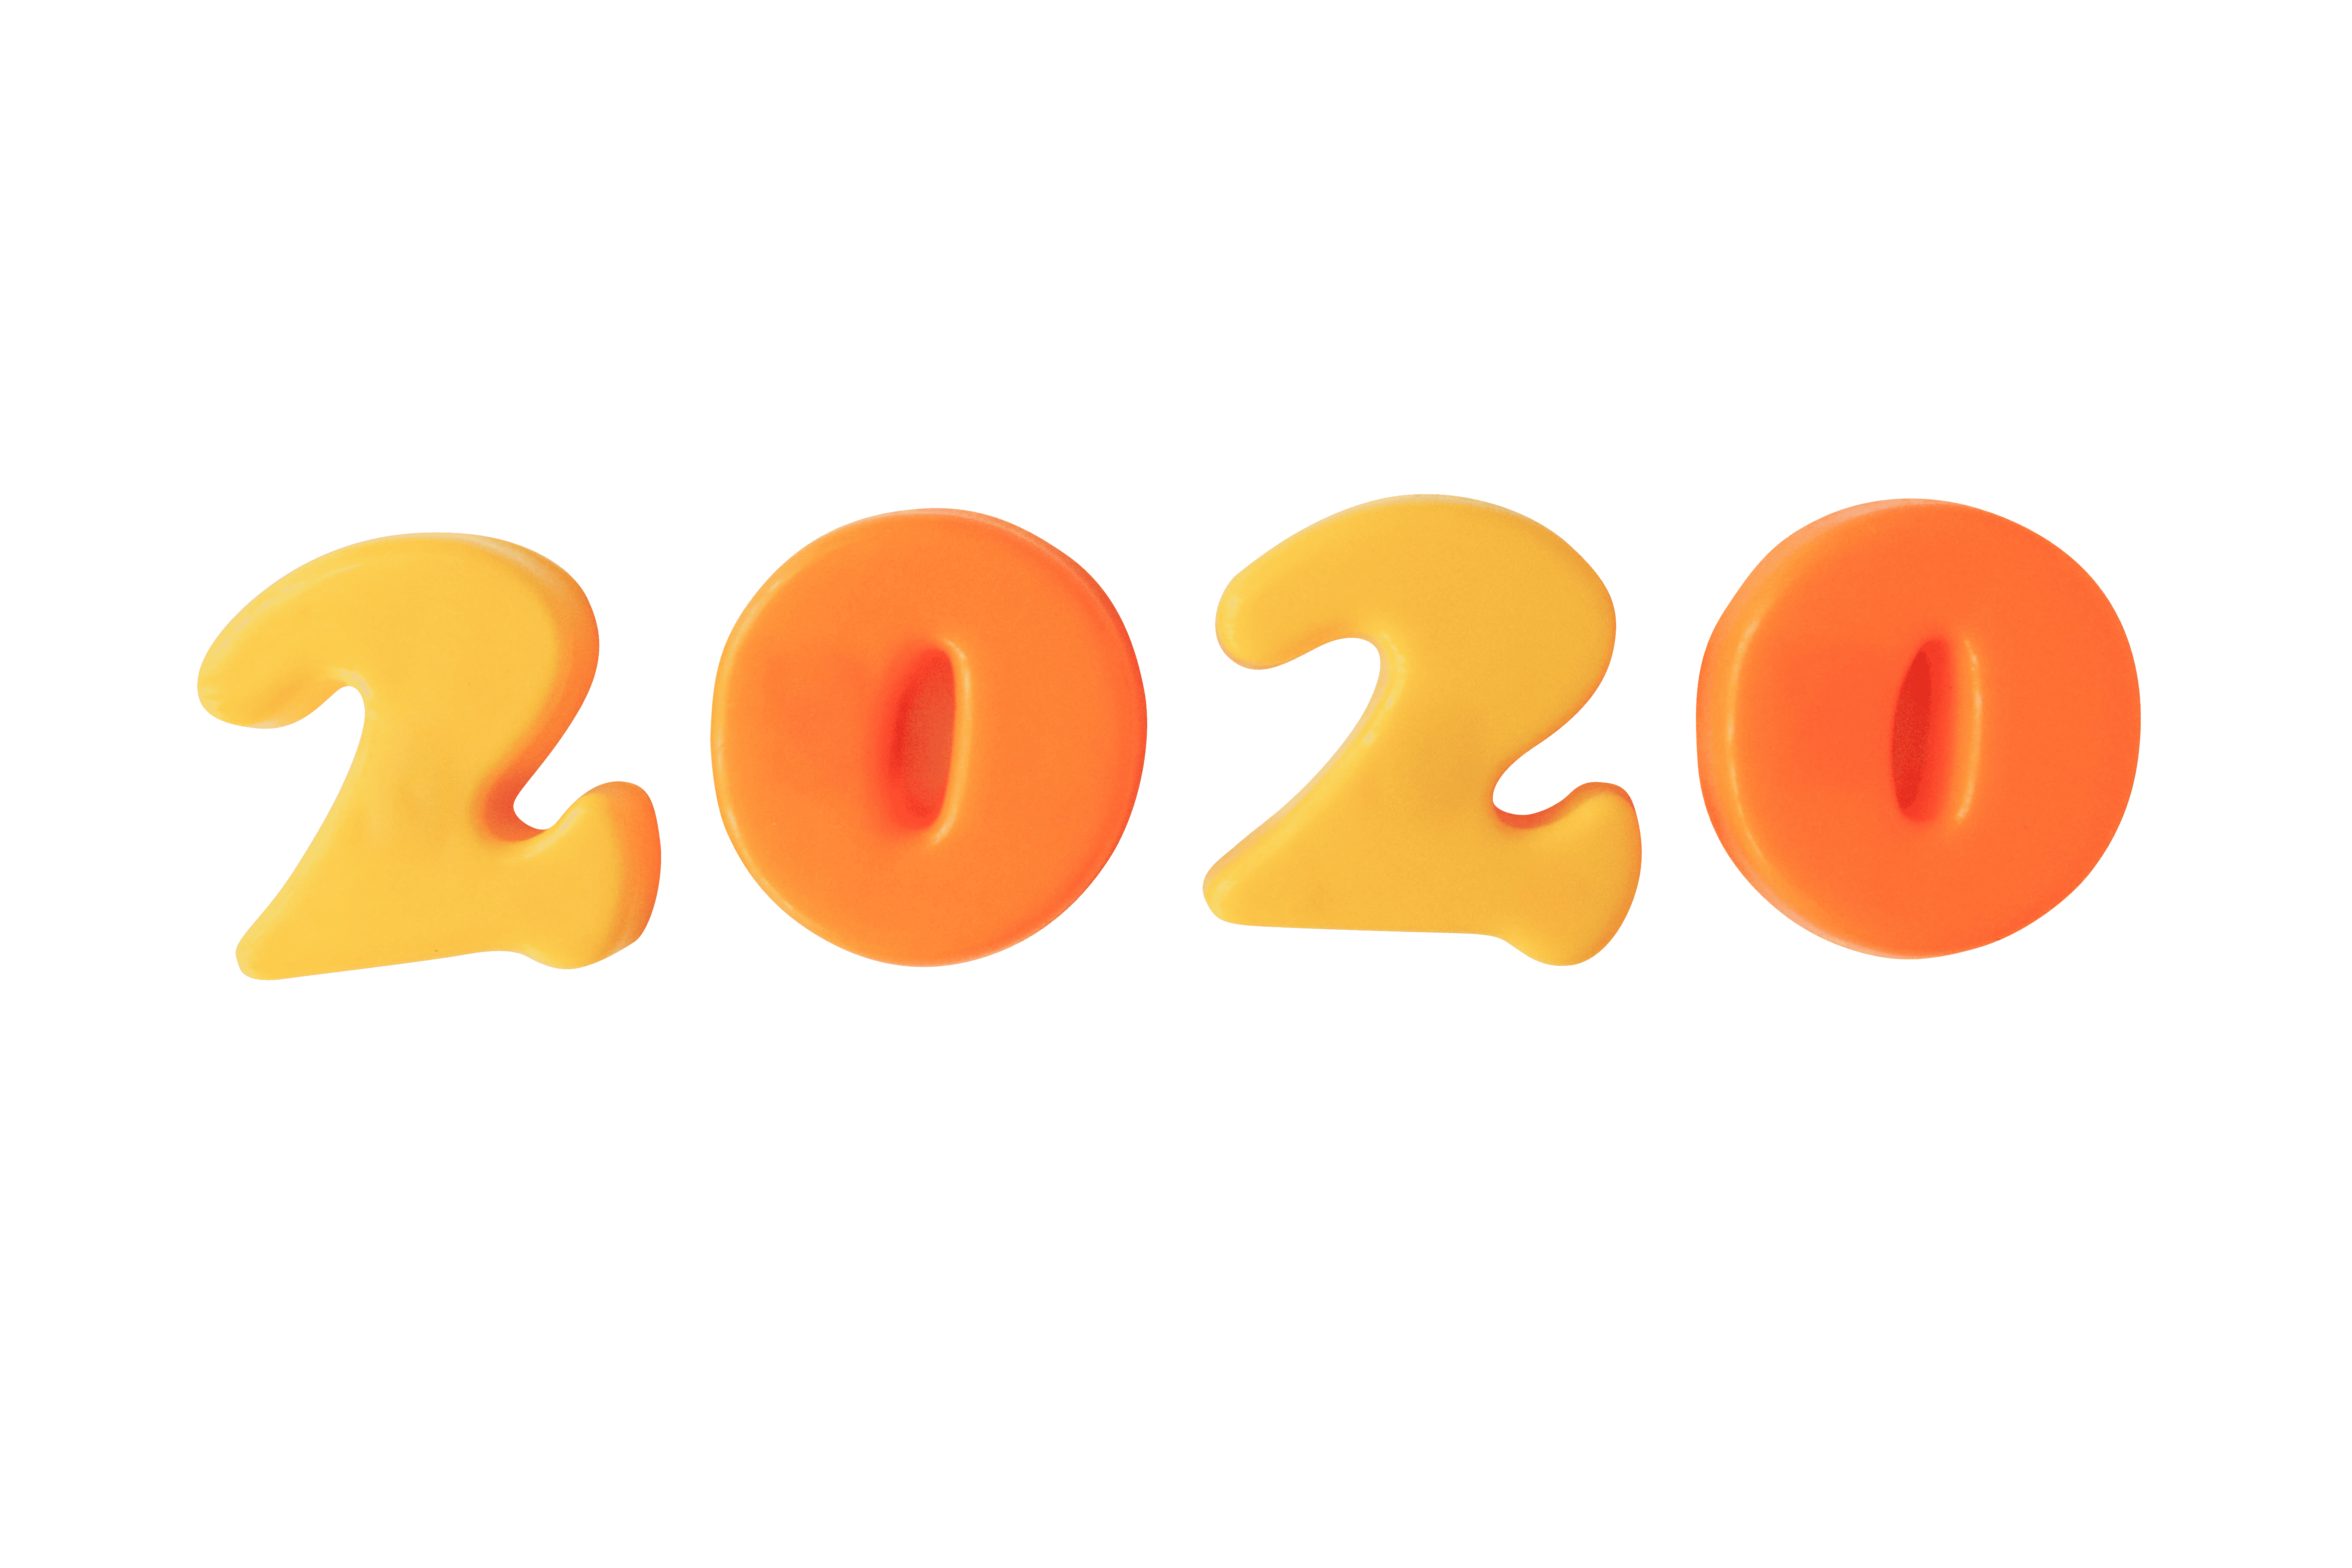 2020 clipart transparent background.png